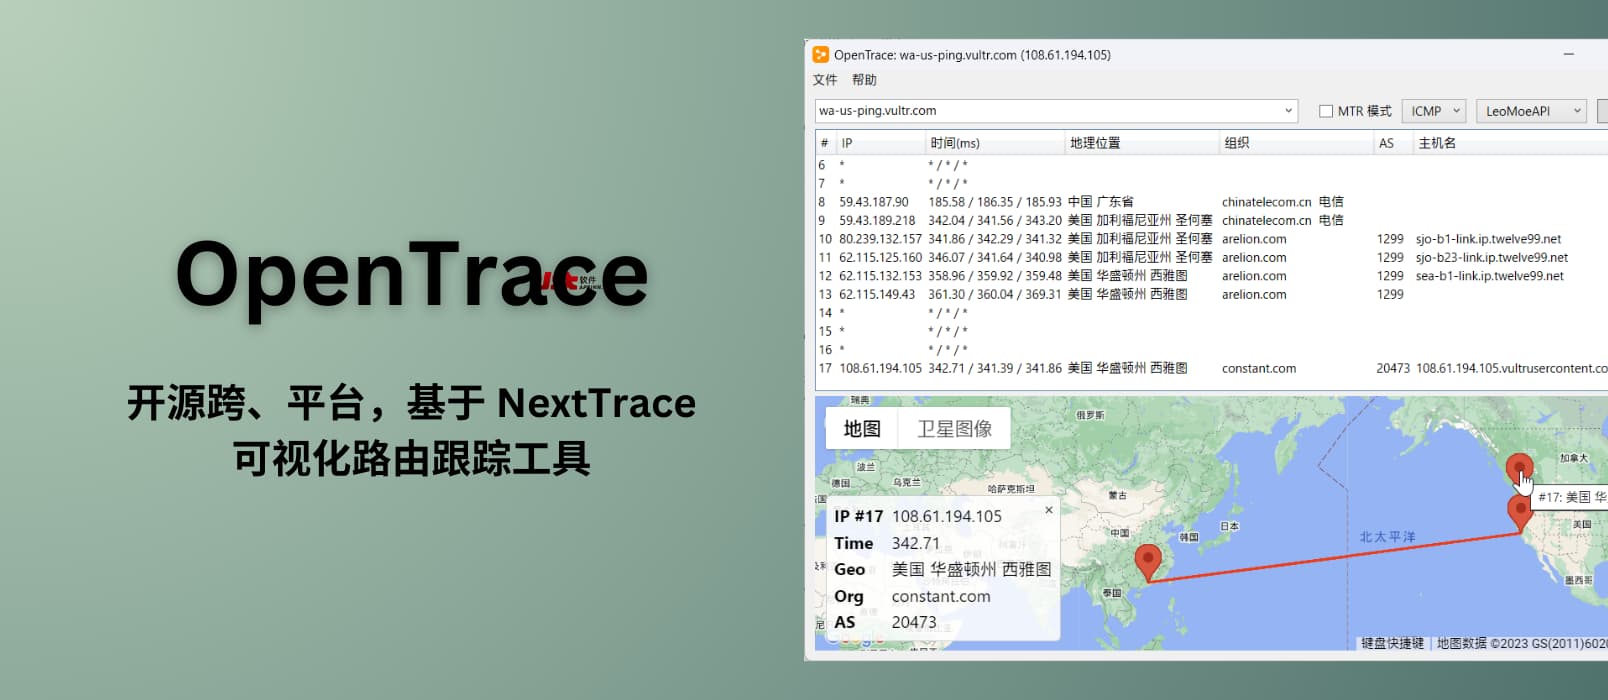 OpenTrace – 开源跨、平台，基于 NextTrace，可视化路由跟踪工具，在地图上追踪并显示 IP 地址